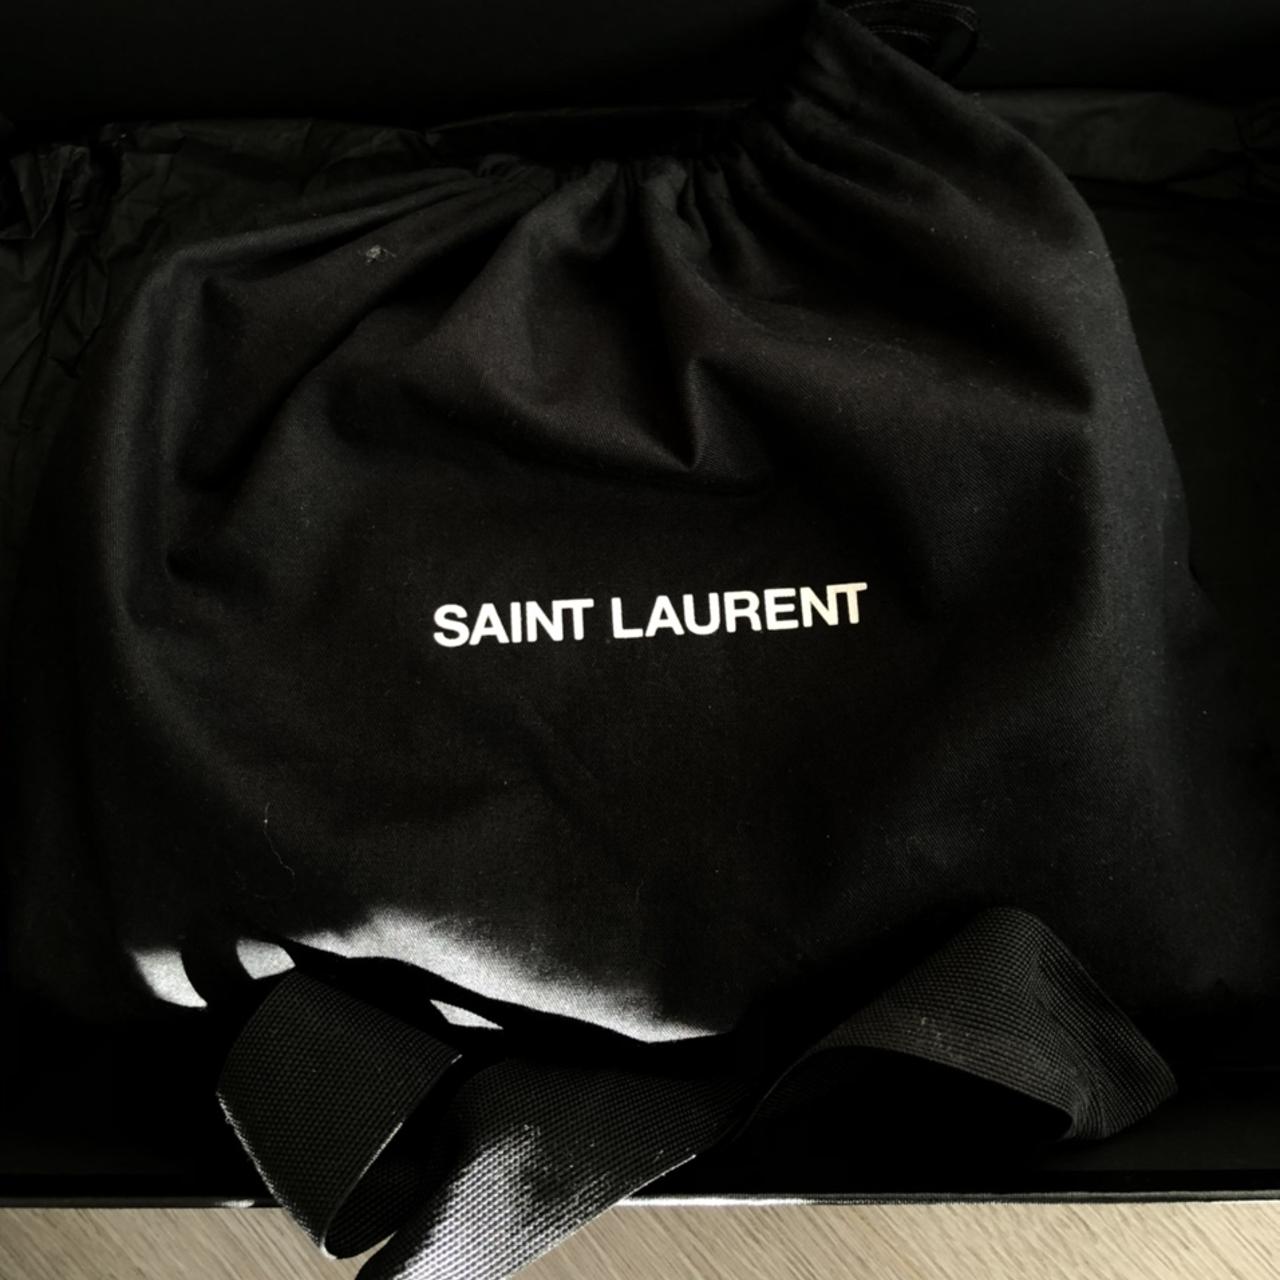 Saint Laurent Sneakers Mens Original dust bag No box - Depop